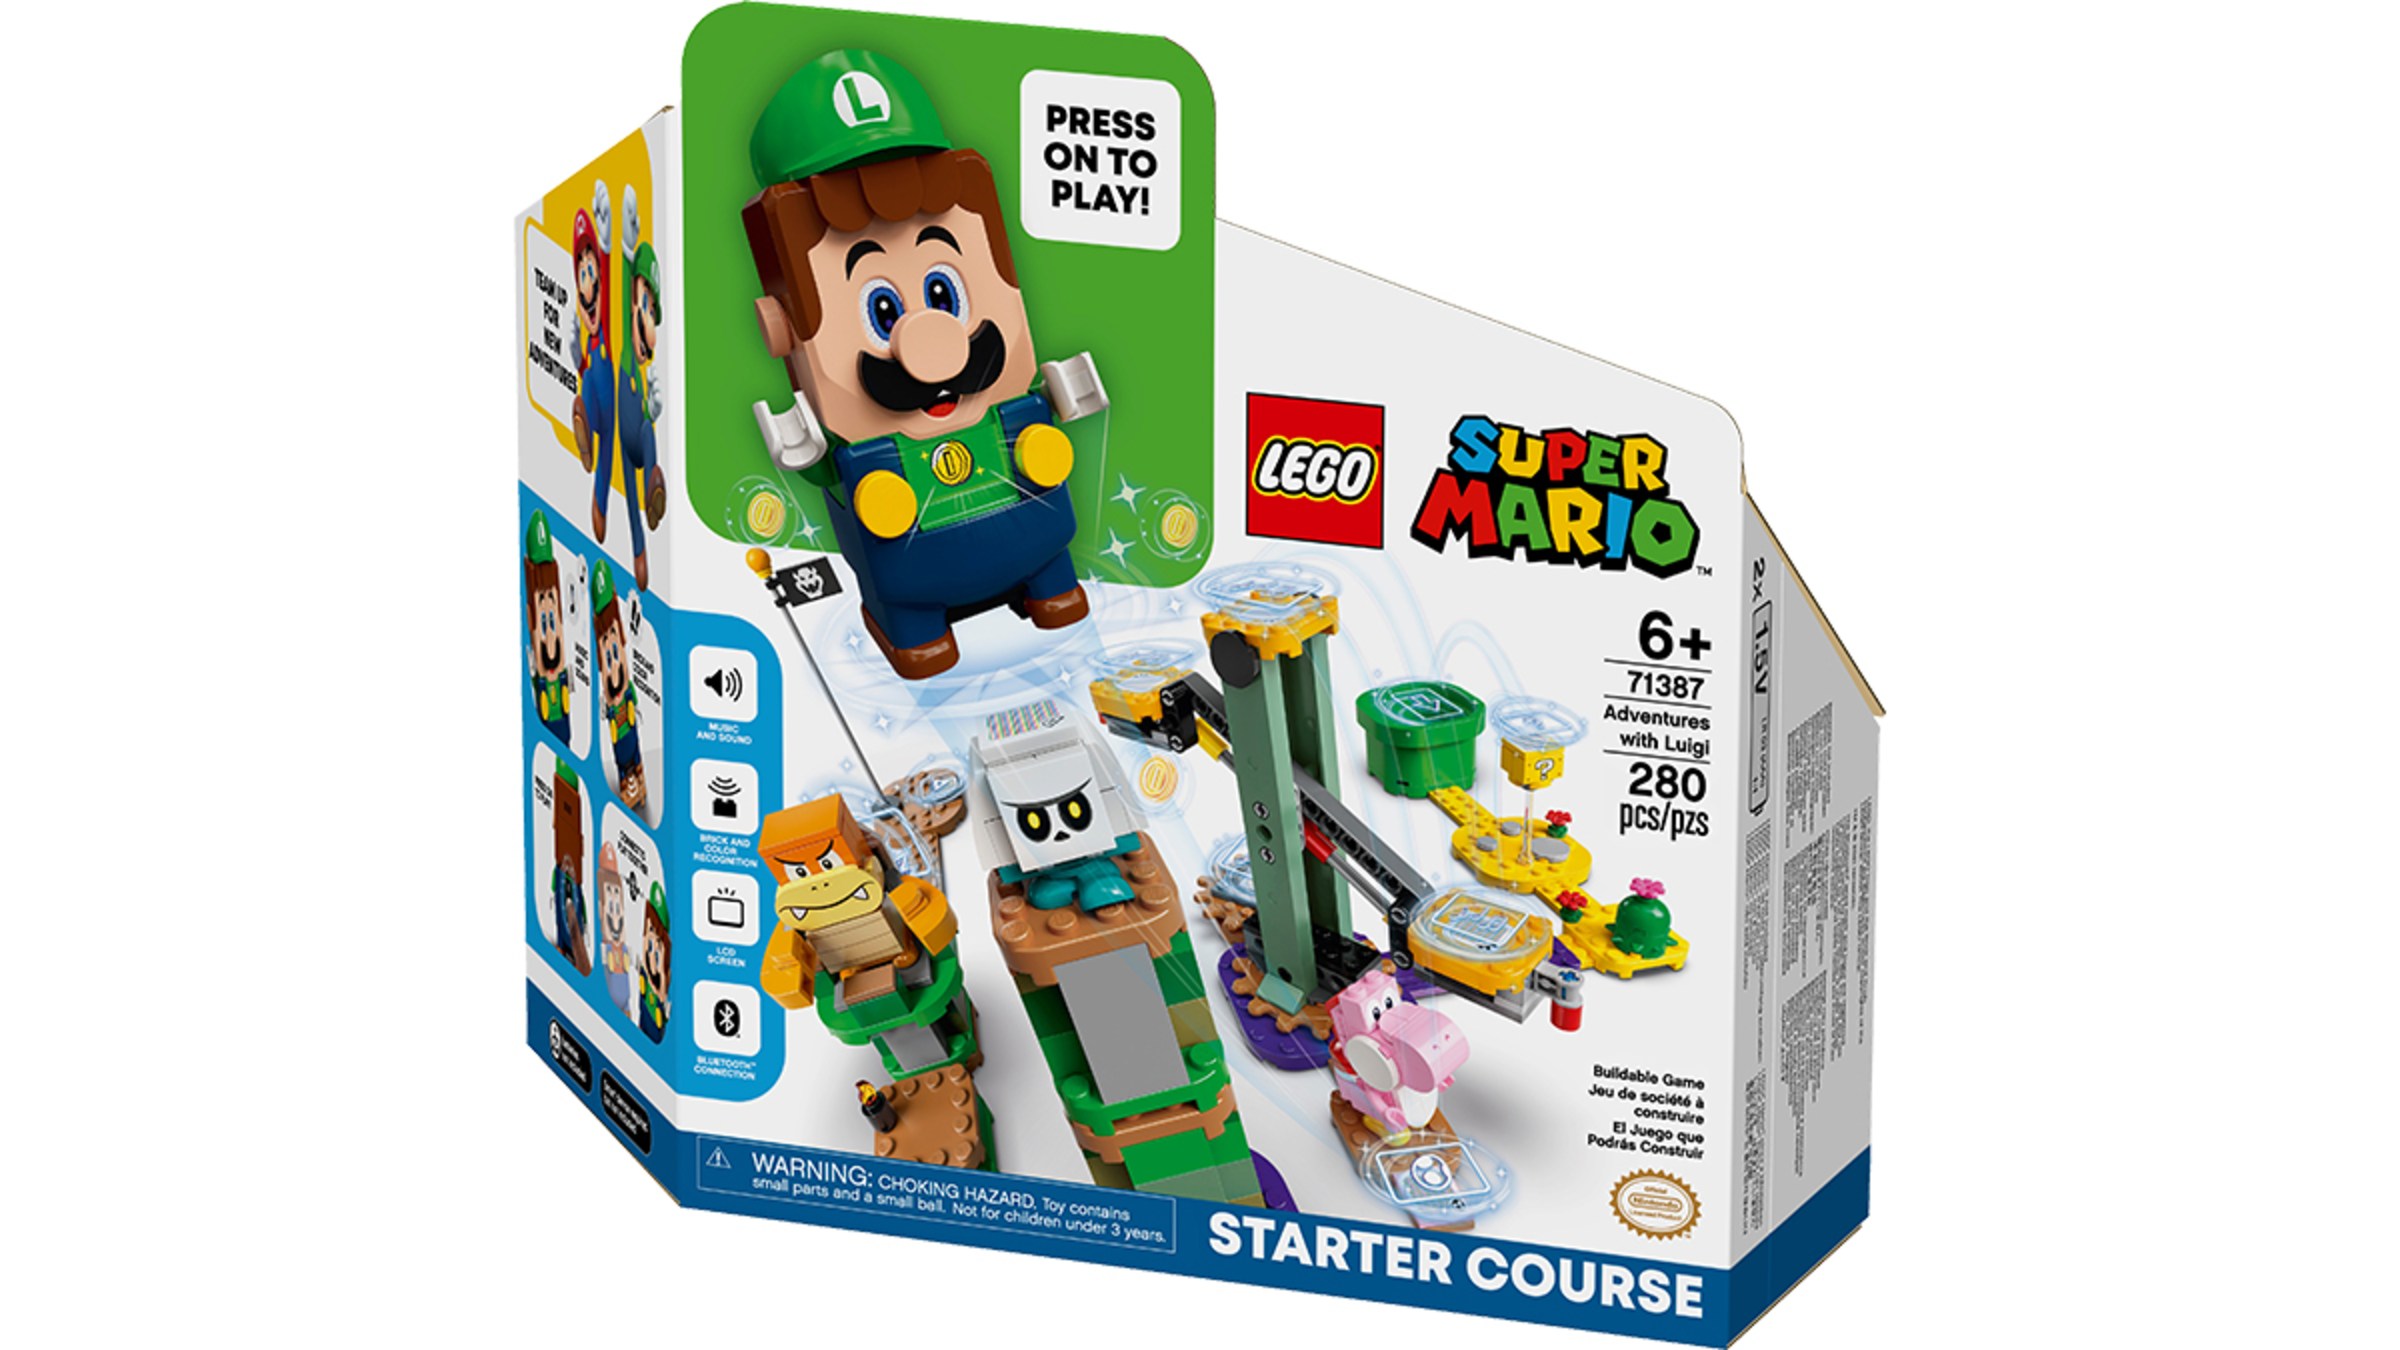 LEGO® Super Mario™ Adventures with Luigi Starter Course